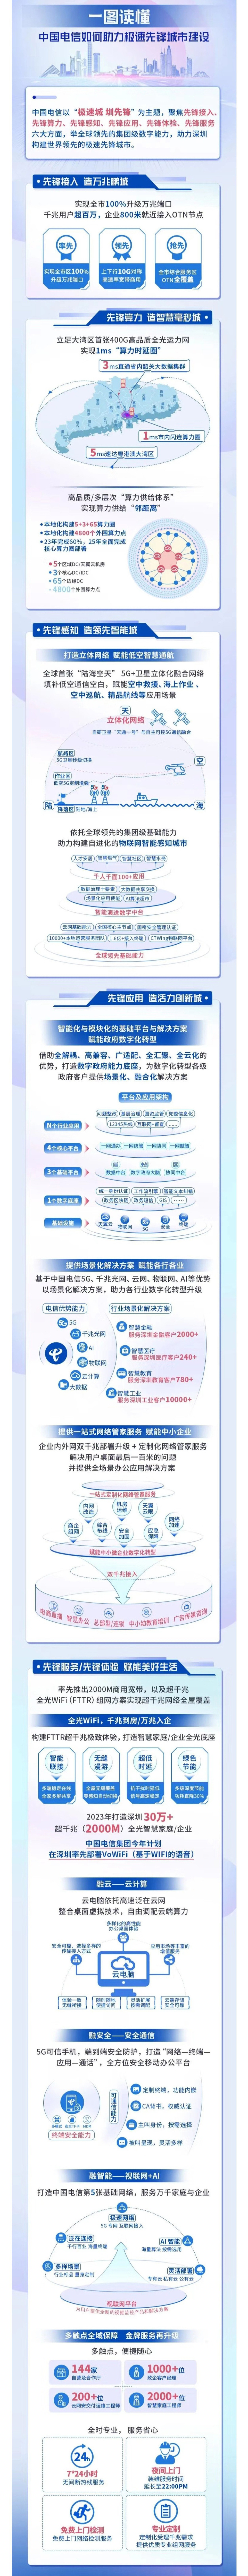 WiFi 融合 5G：中国电信率先上线 VoWiFi 服务，广州、深圳、东莞、佛山现已可用 - 2